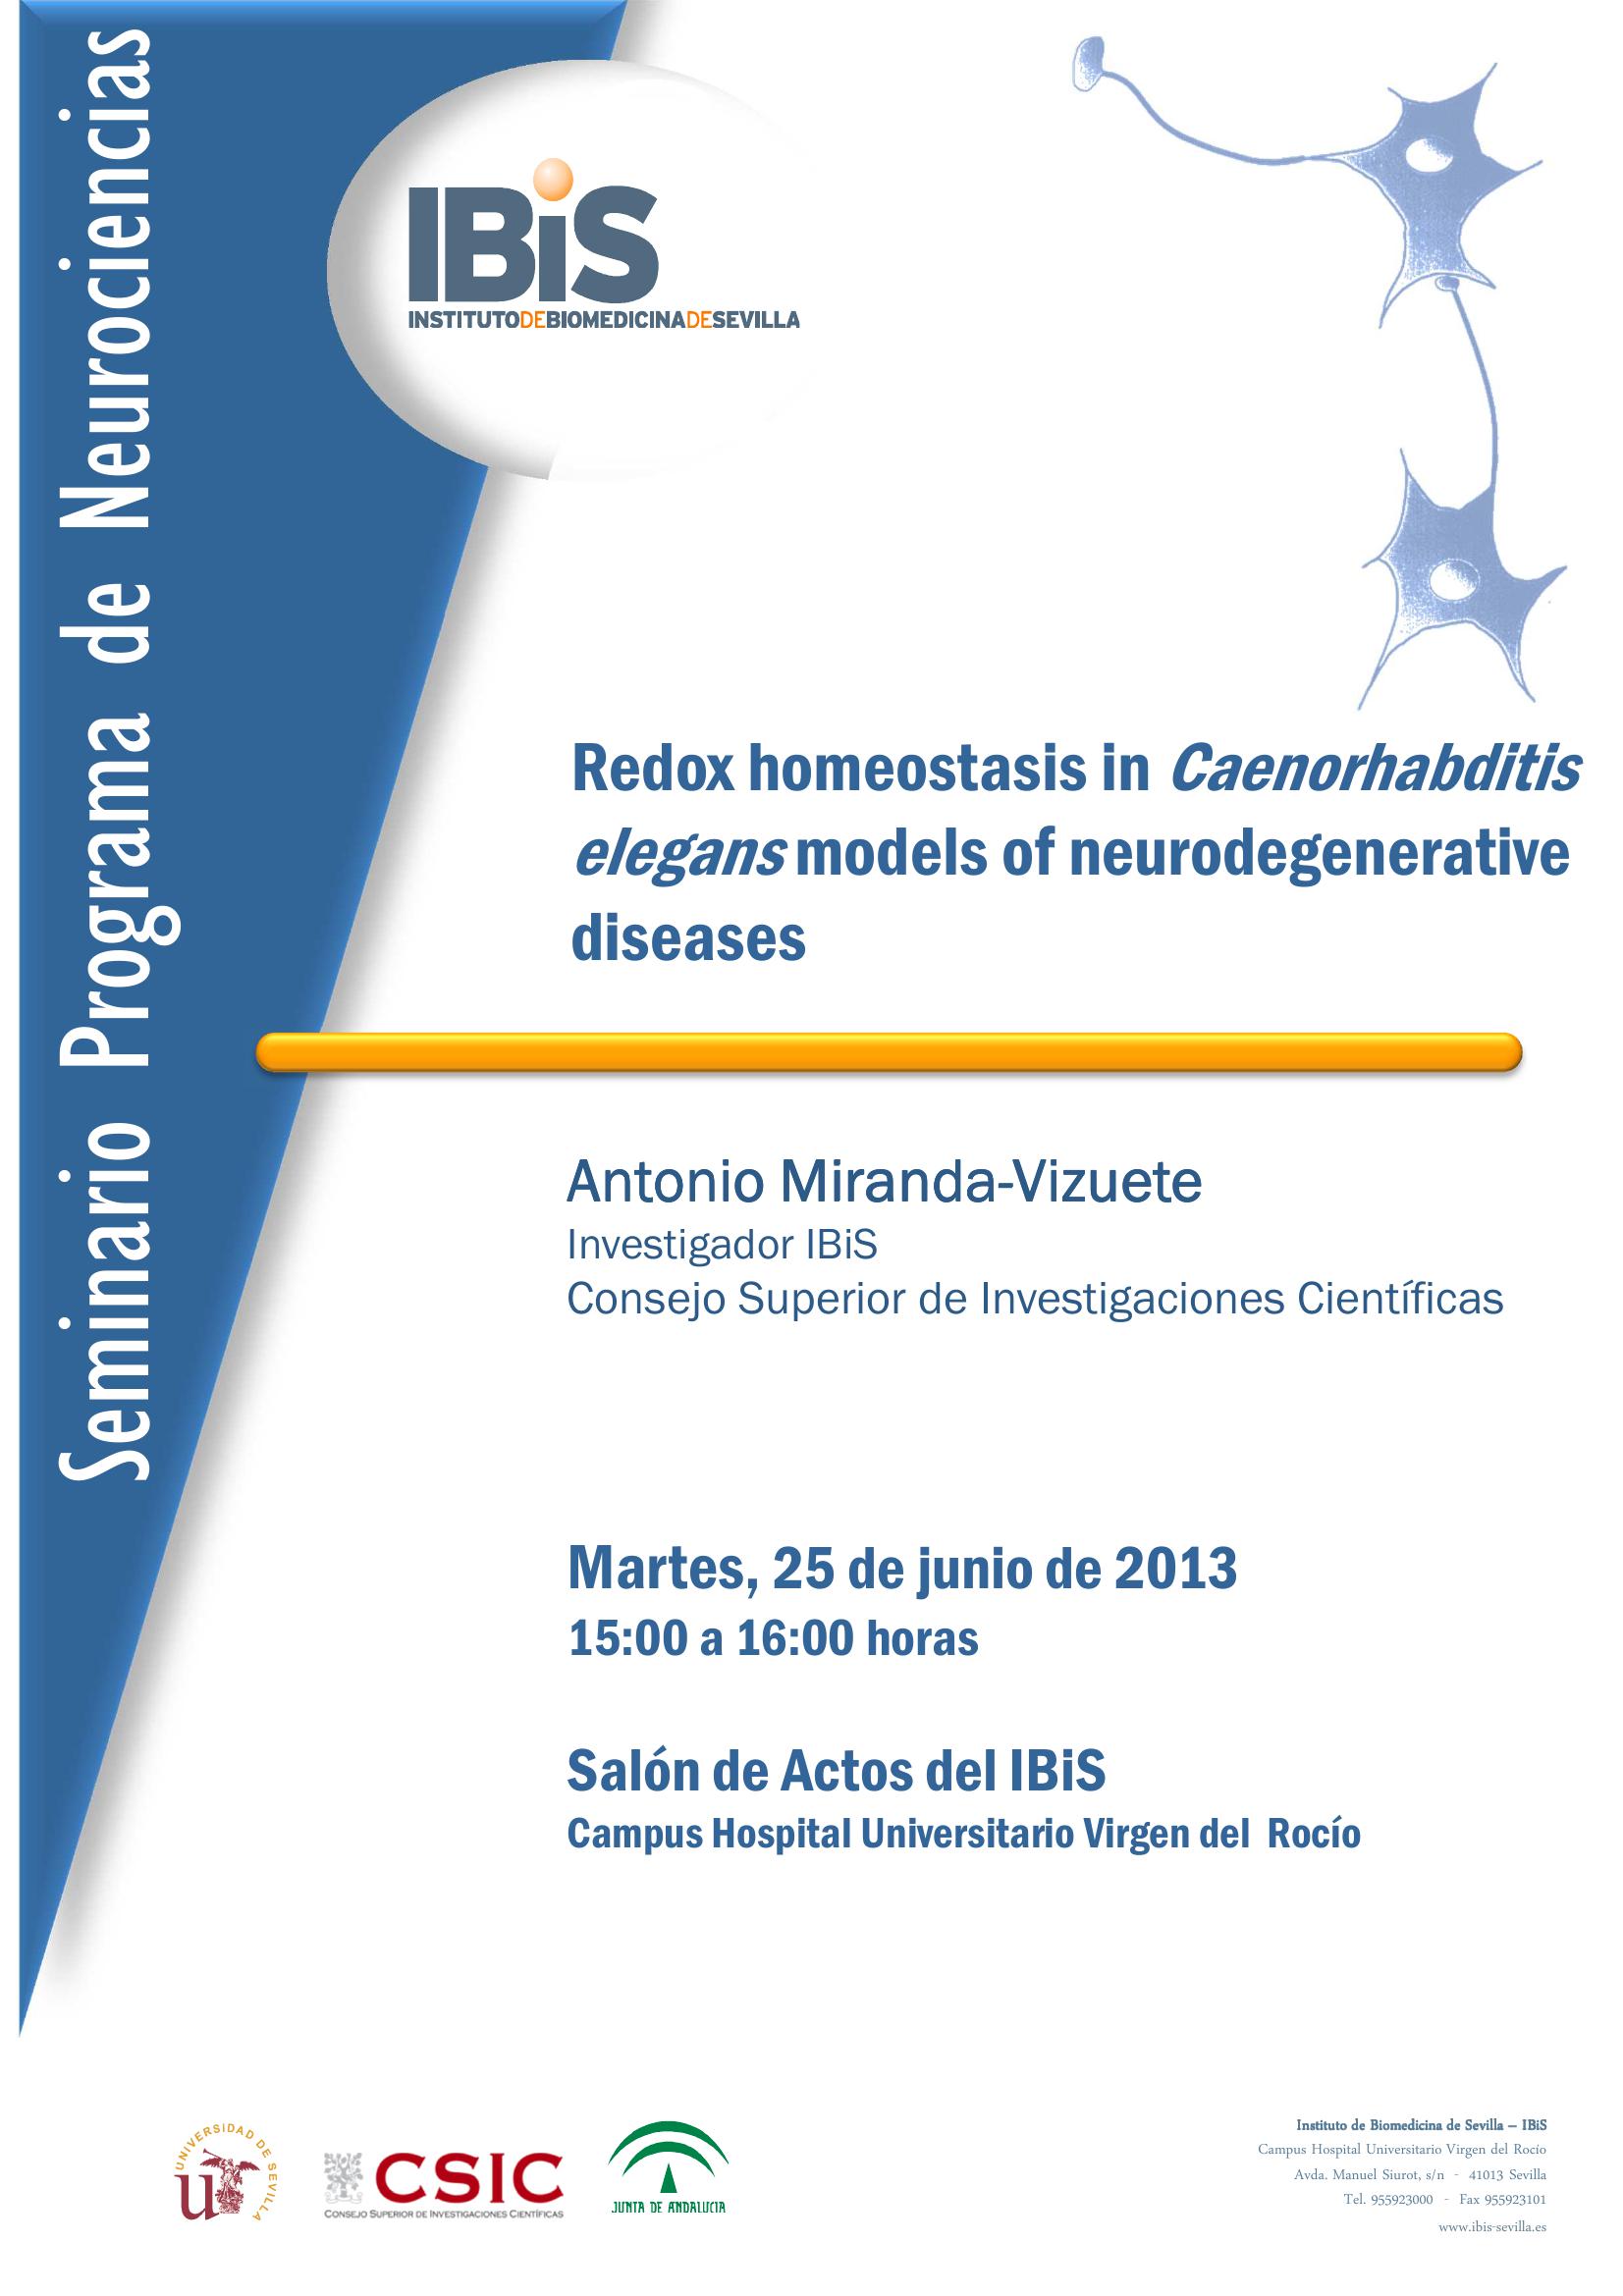 Poster: Redox homeostasis in Caenorhabditis elegans models of neurodegenerative diseases